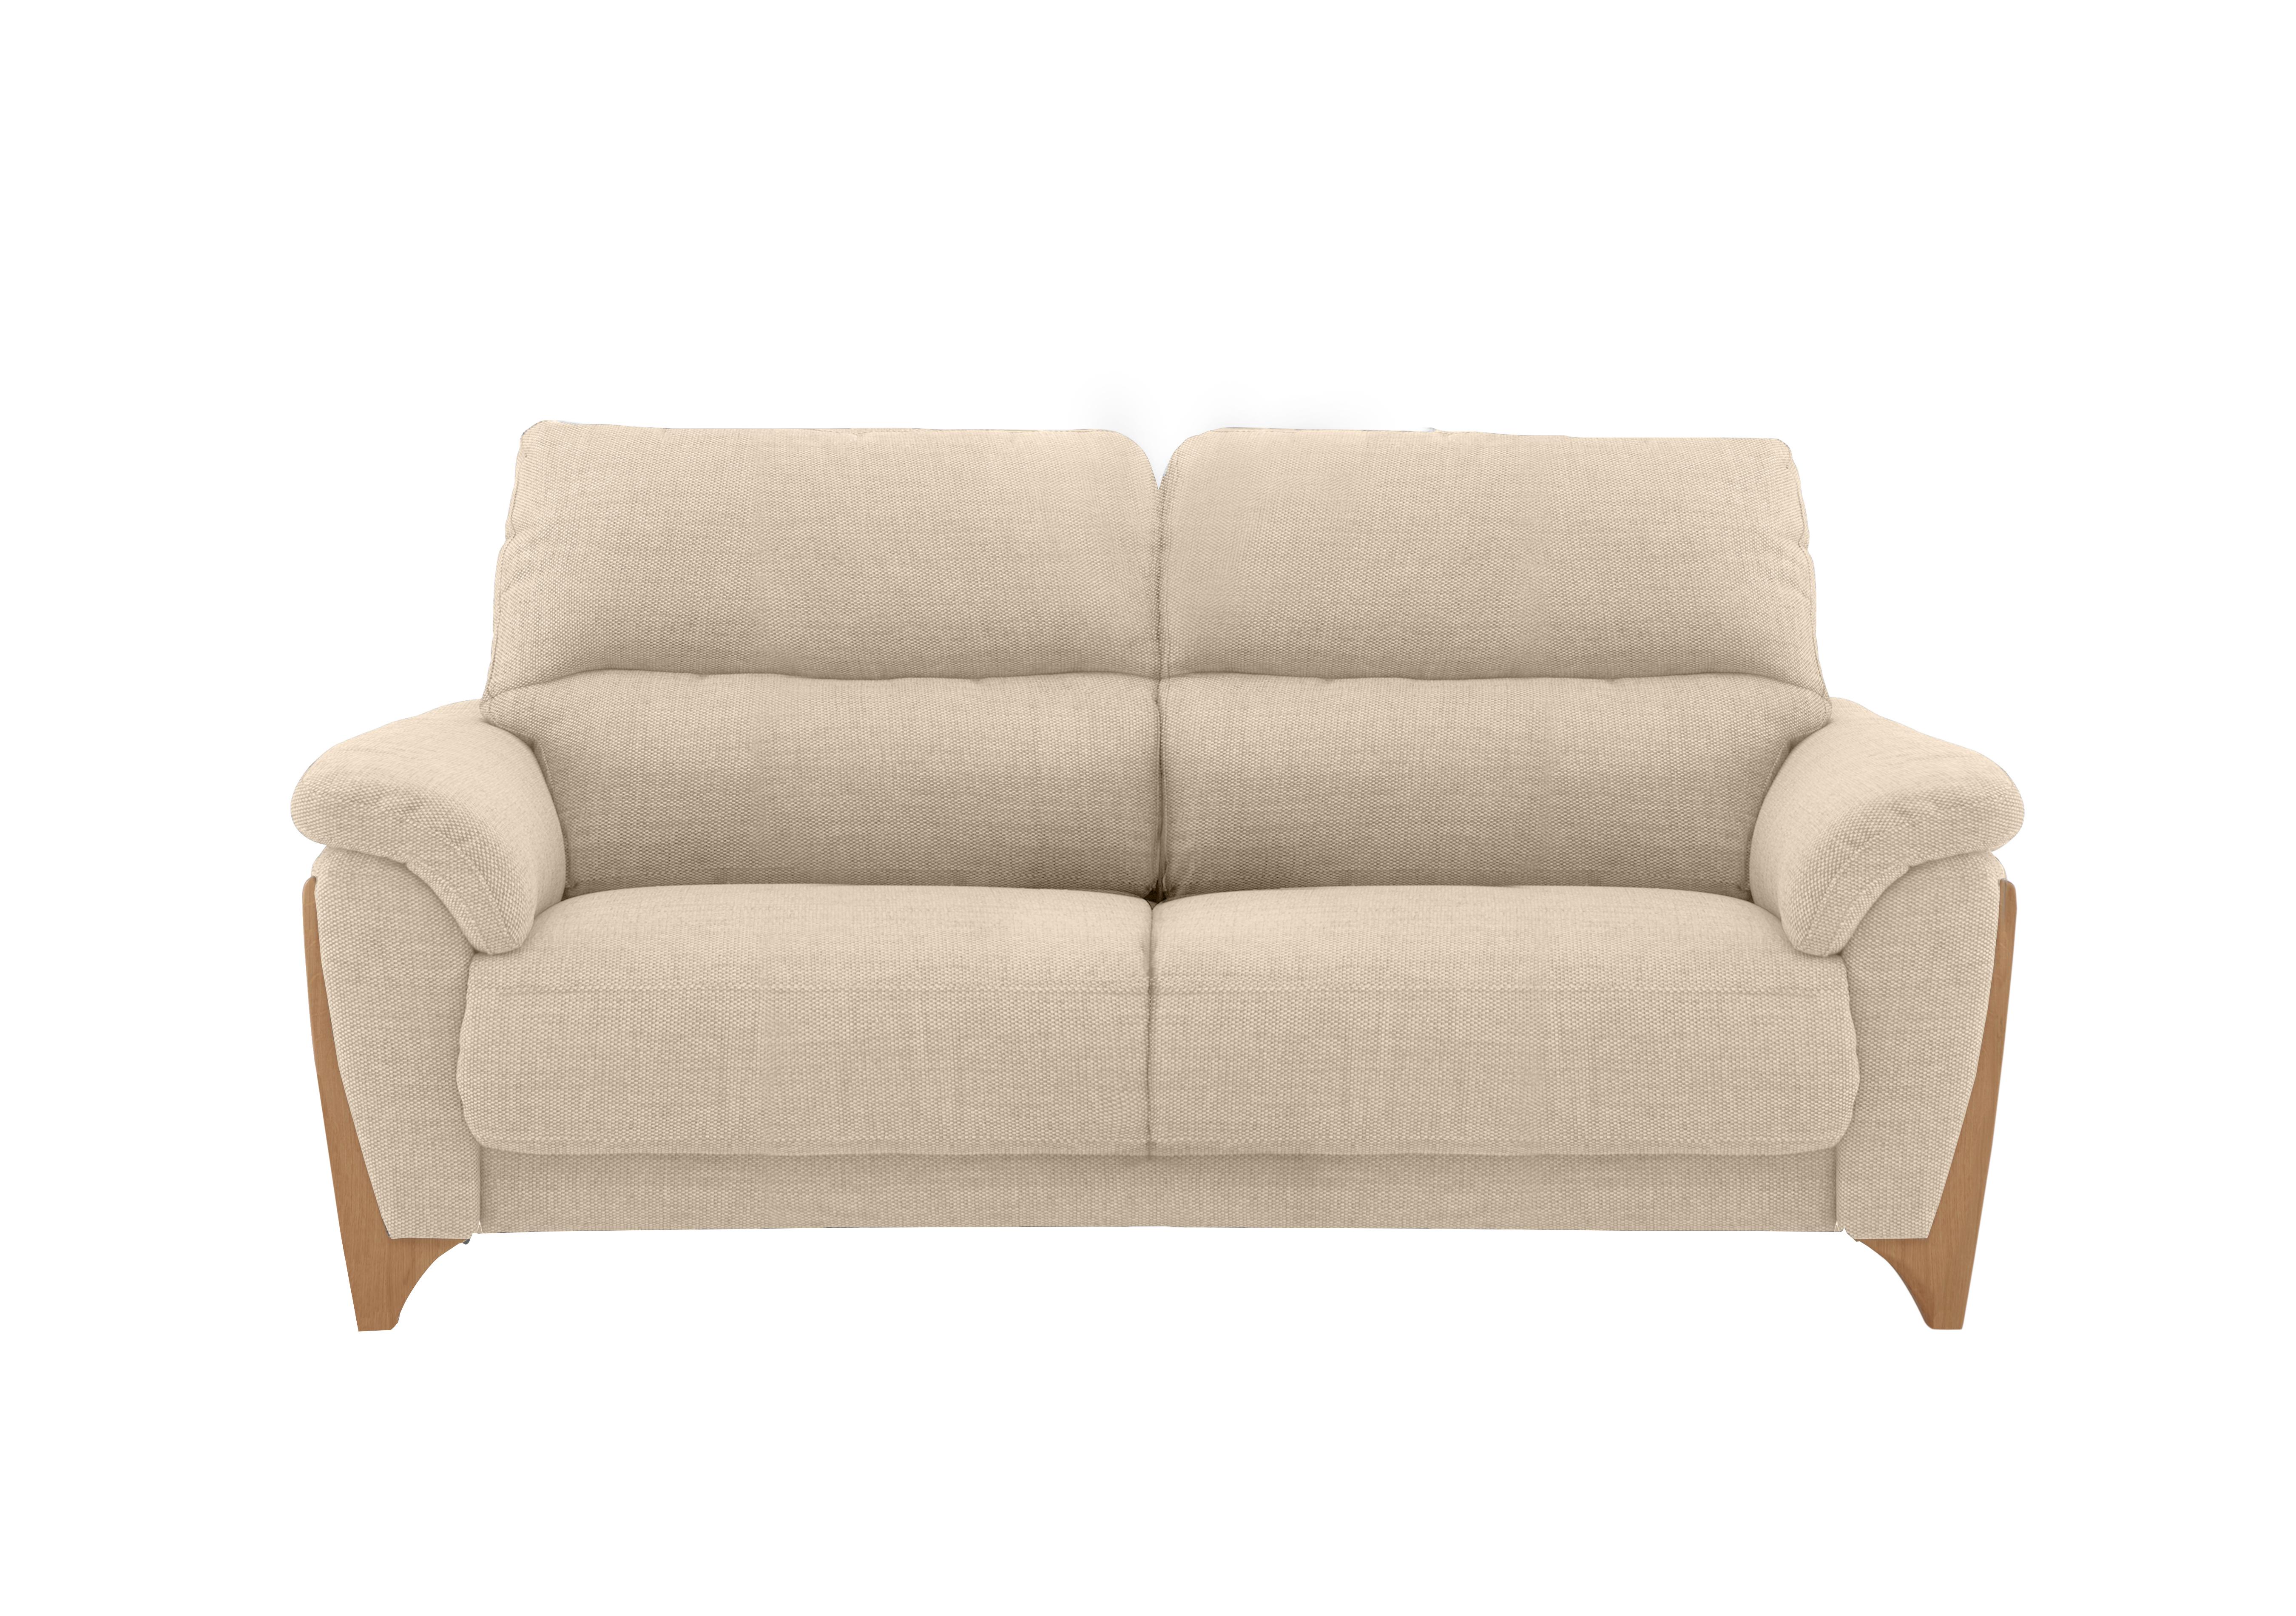 Enna Large Fabric Sofa in P214 on Furniture Village